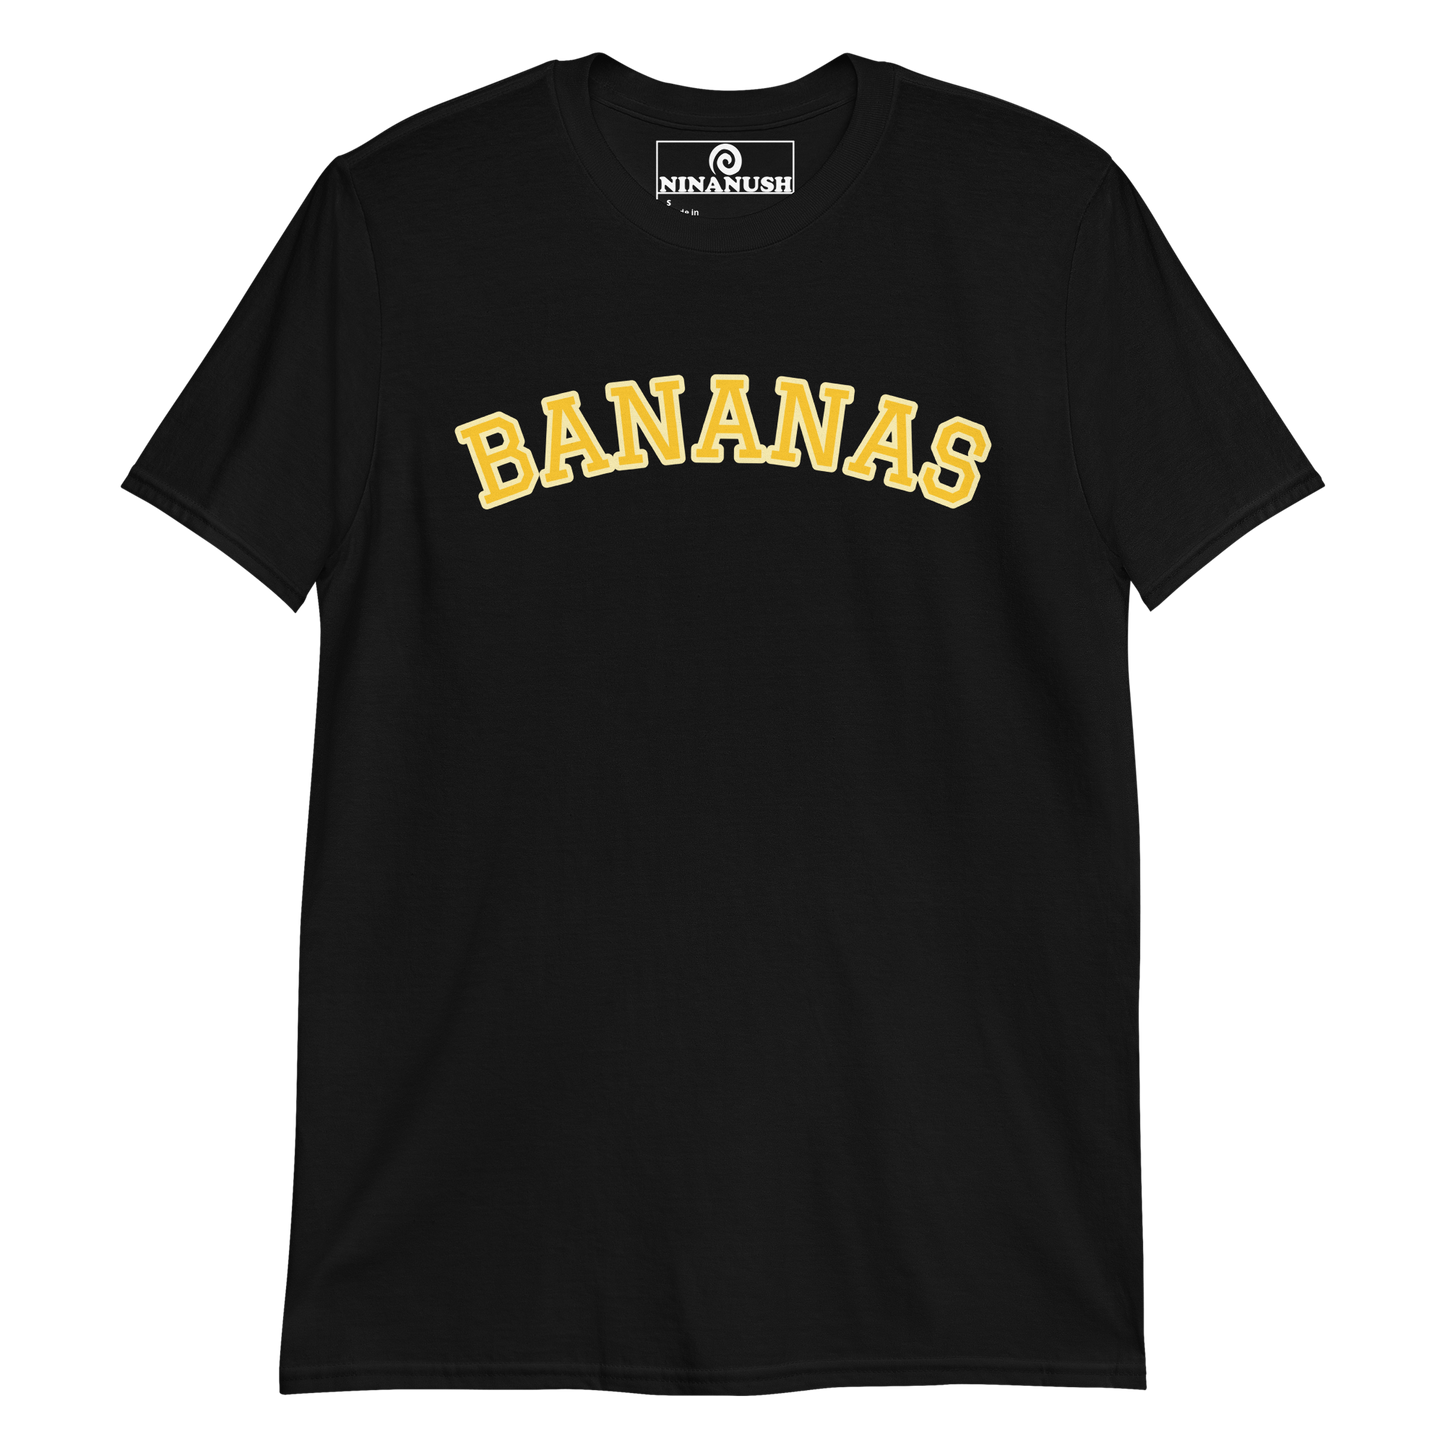 Bananas shirt